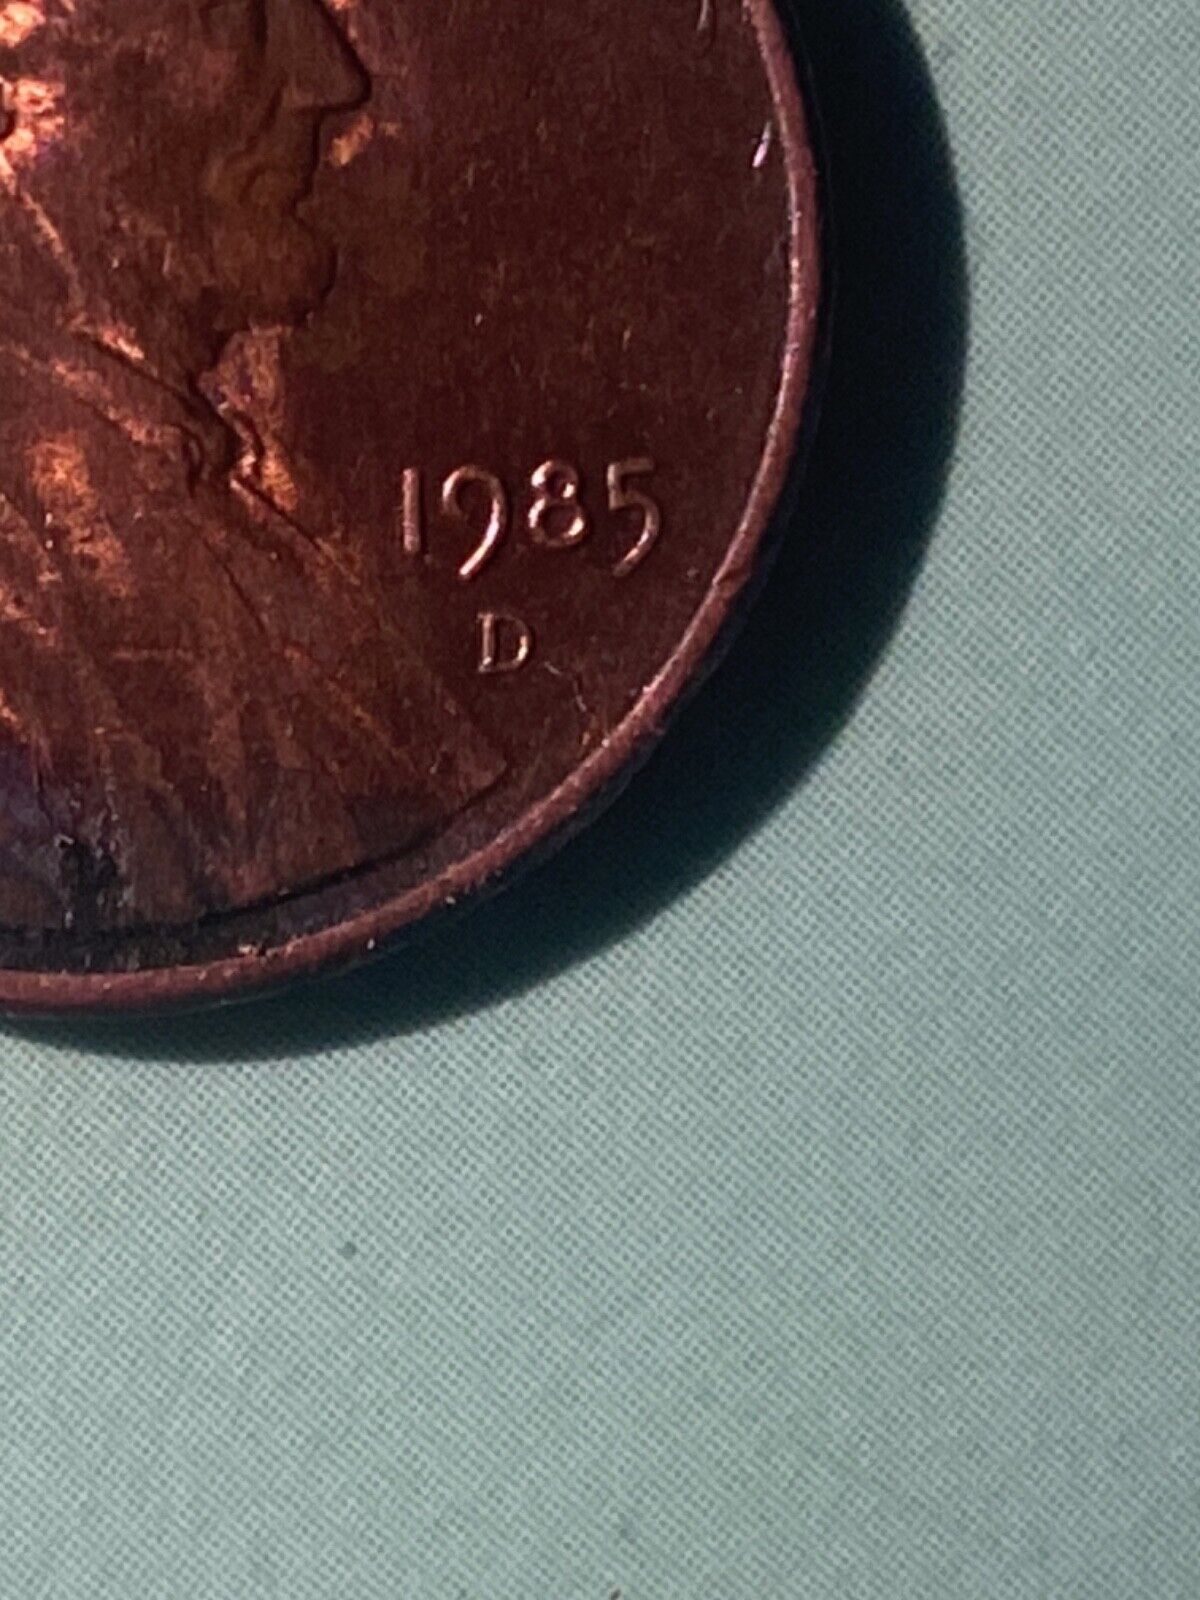 1985 d Lincoln Error Penny Doubling in Date & Mintmark